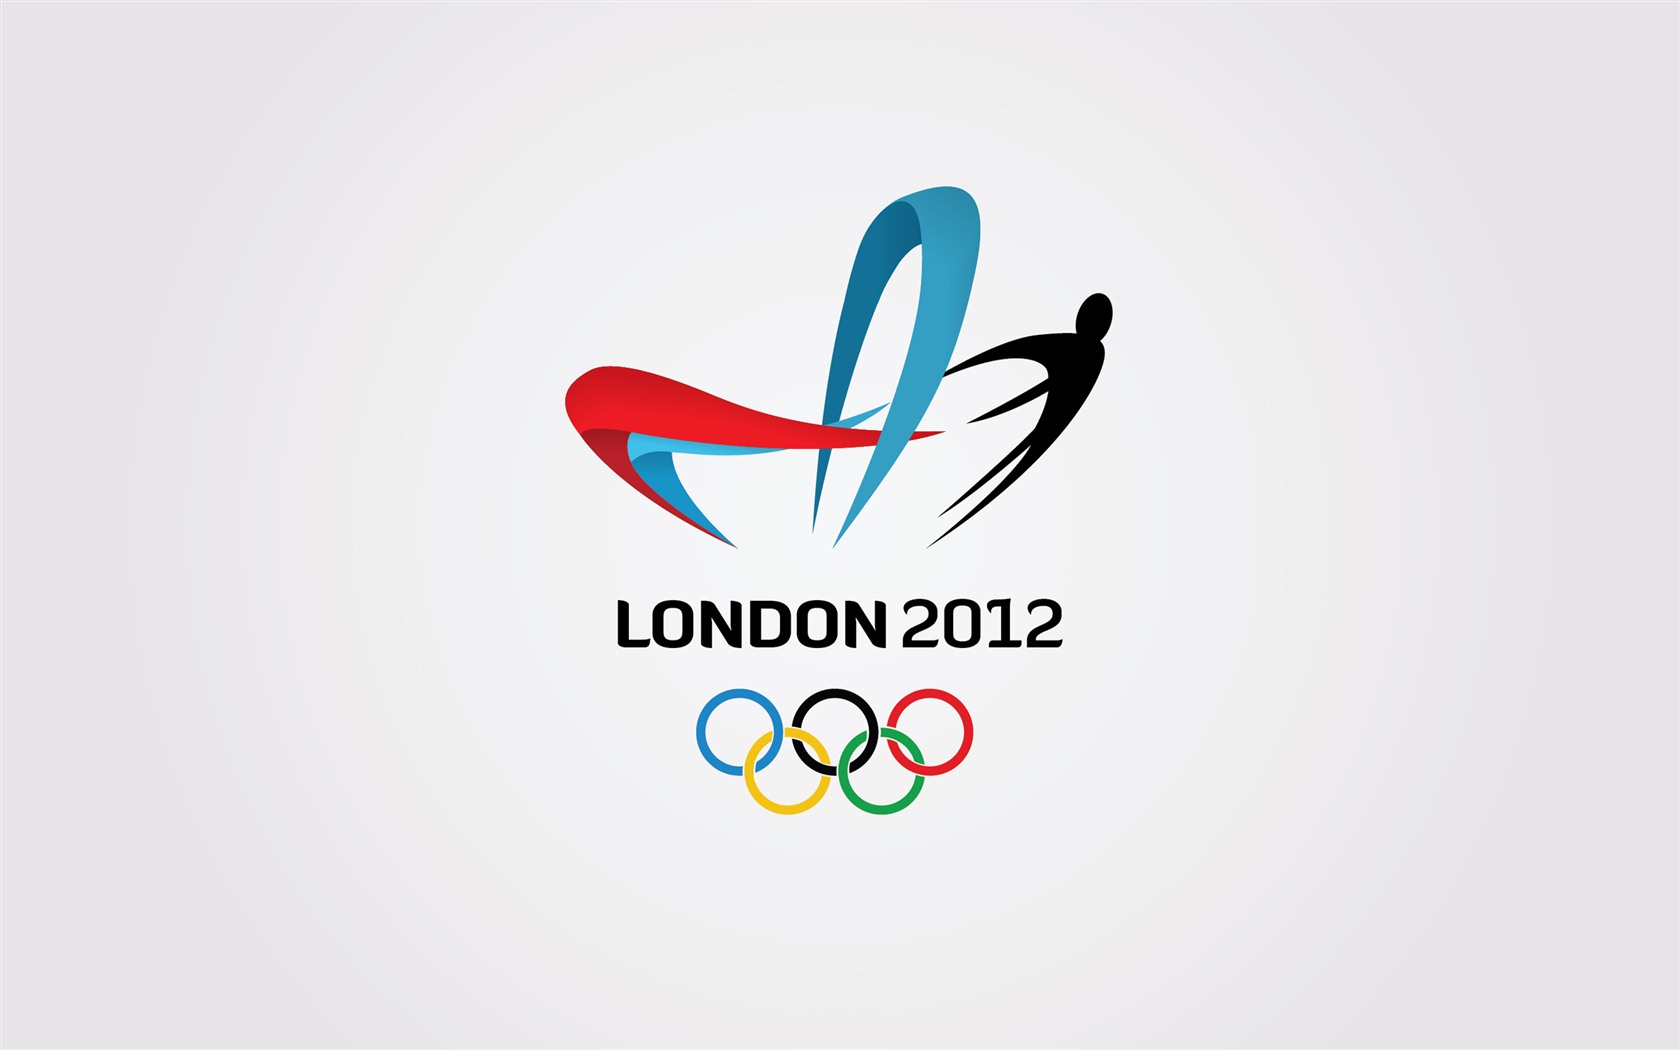 London 2012 Olympics theme wallpapers (2) #25 - 1680x1050